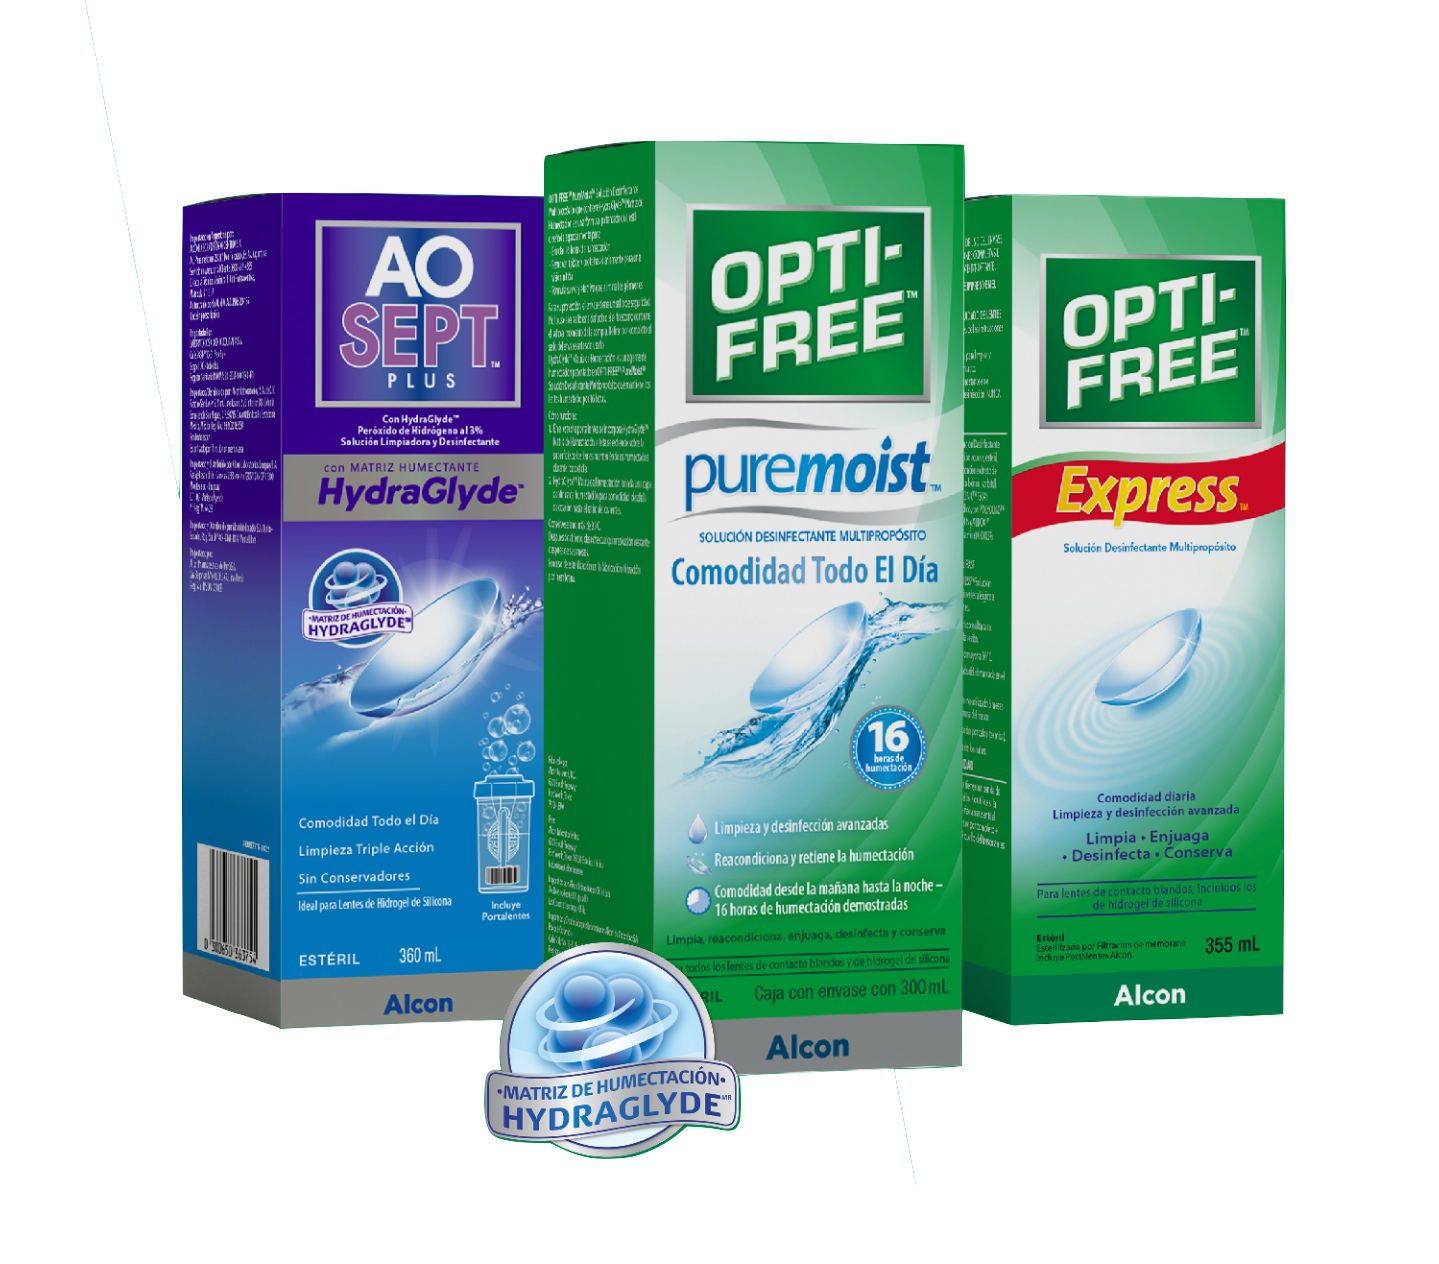 image of ao sept, opti-free puremoist and opti-free expres